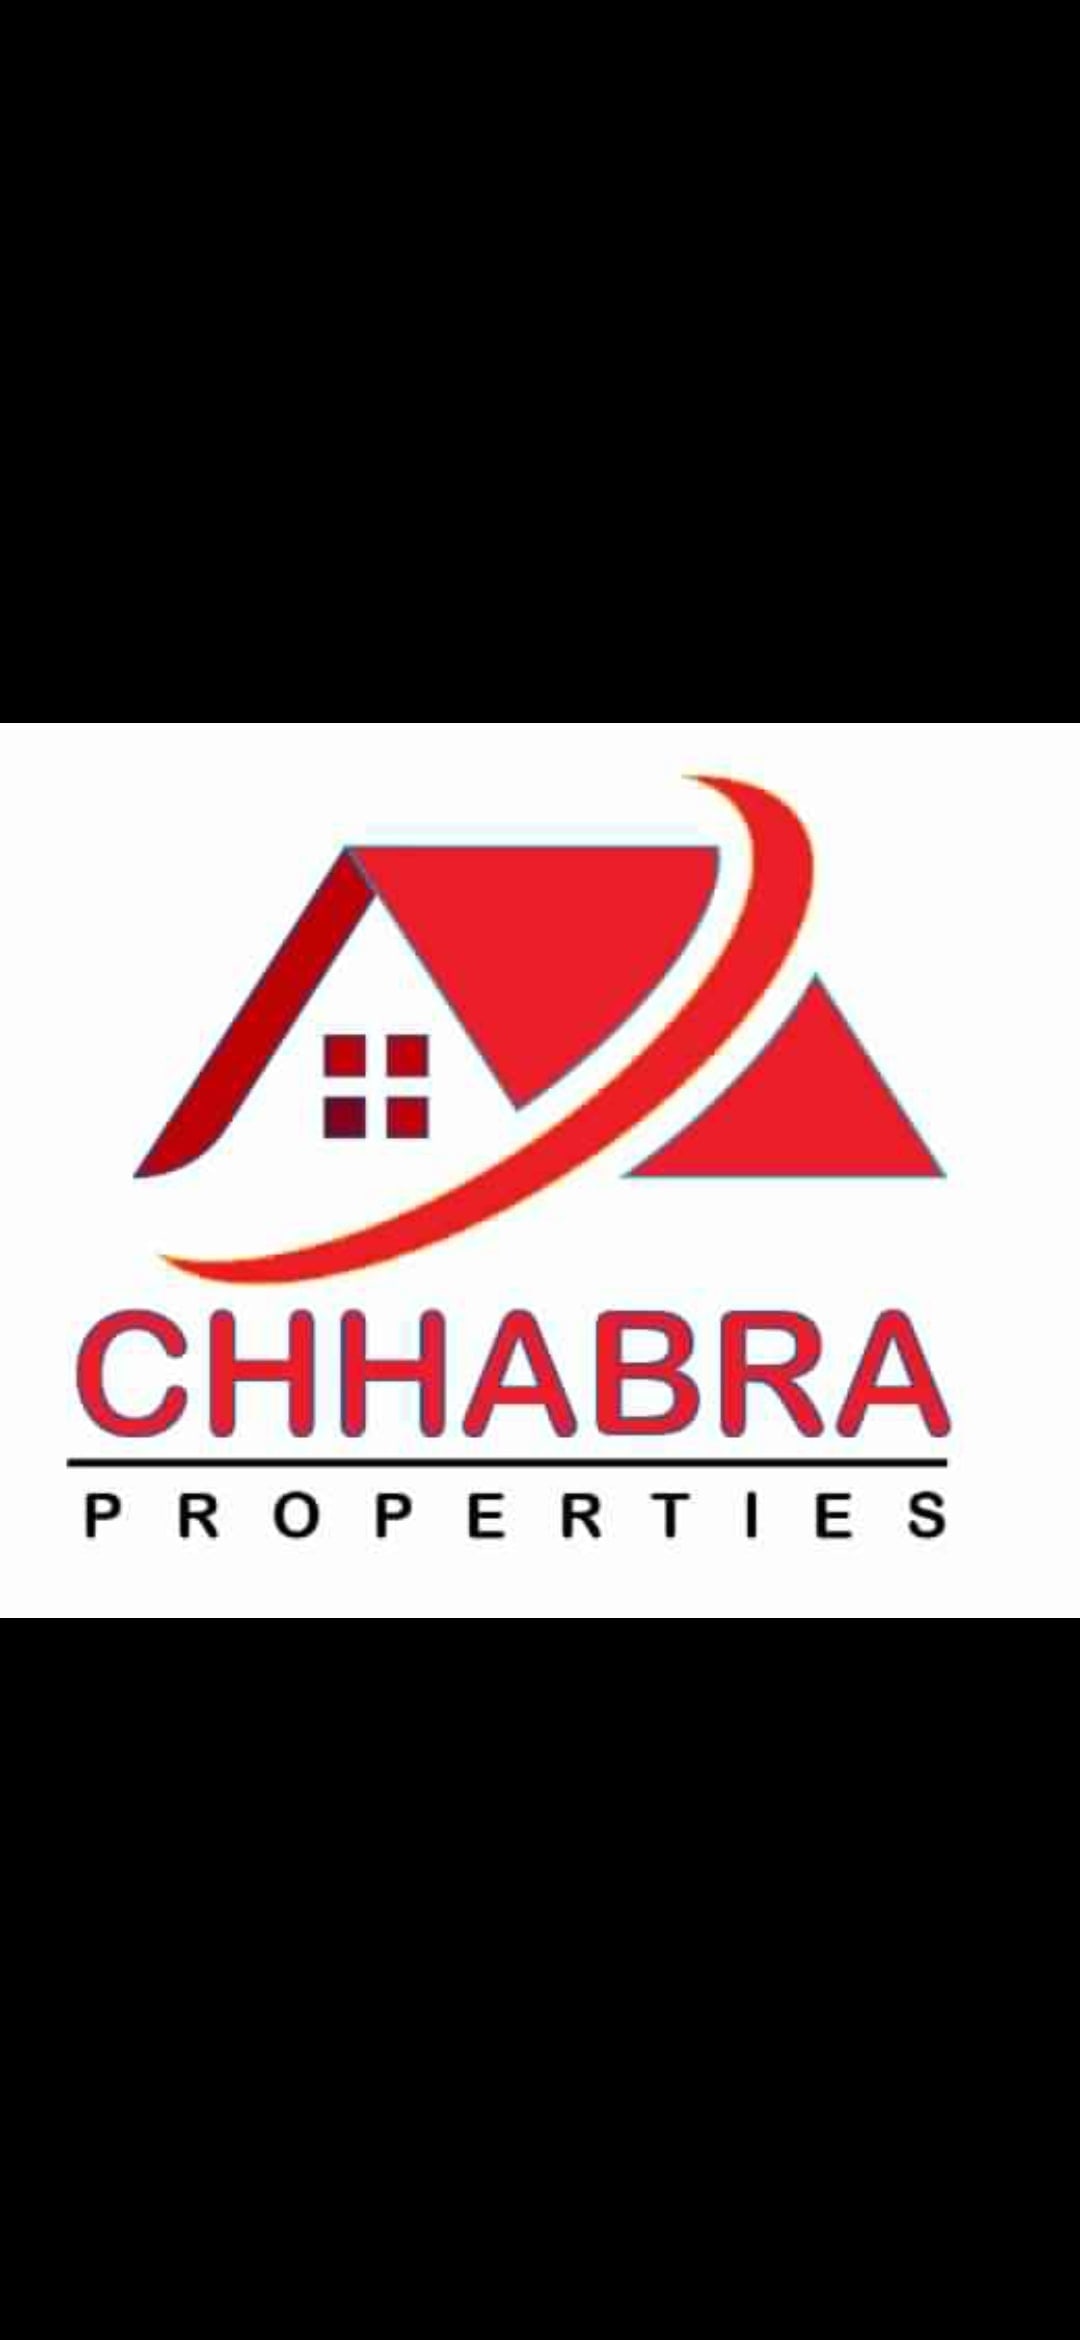 Chhabra Properties